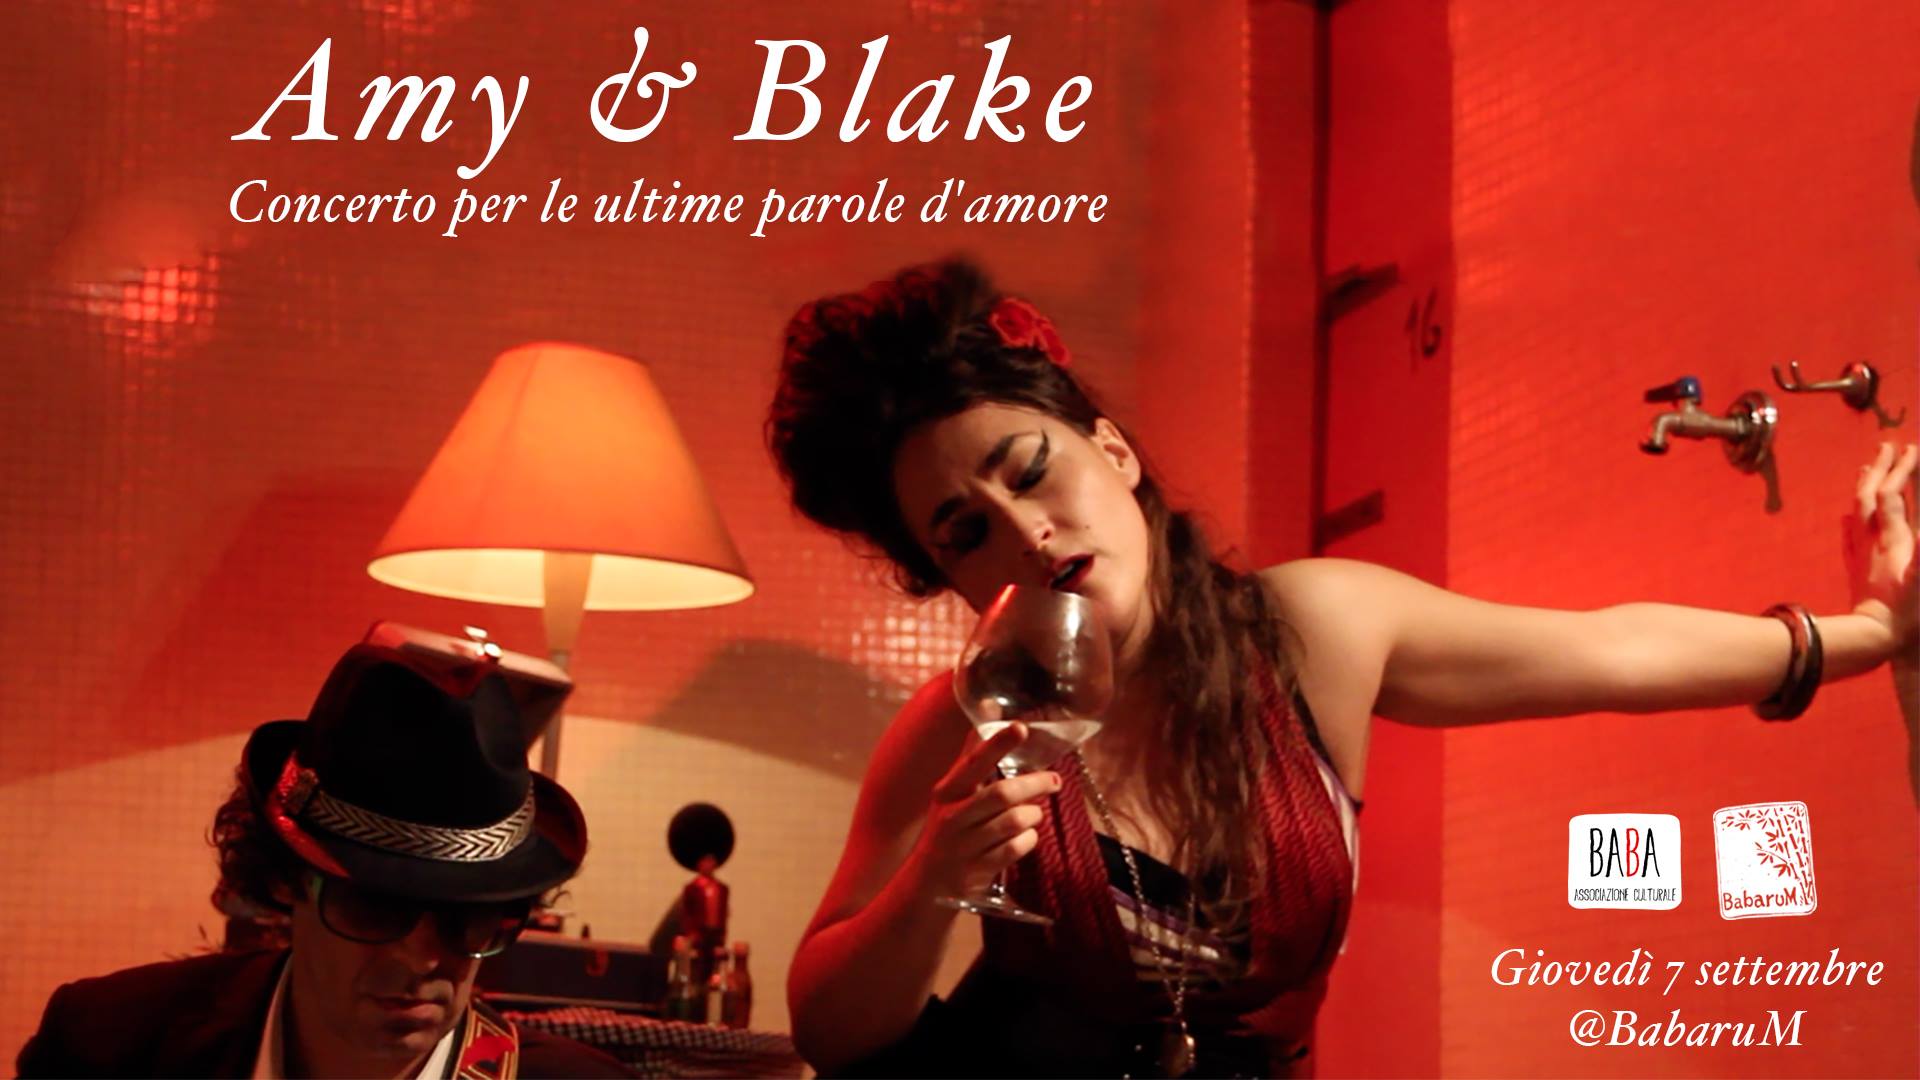 Amy&Blake_Concerto per le ultime parole d’amore @BabaruM